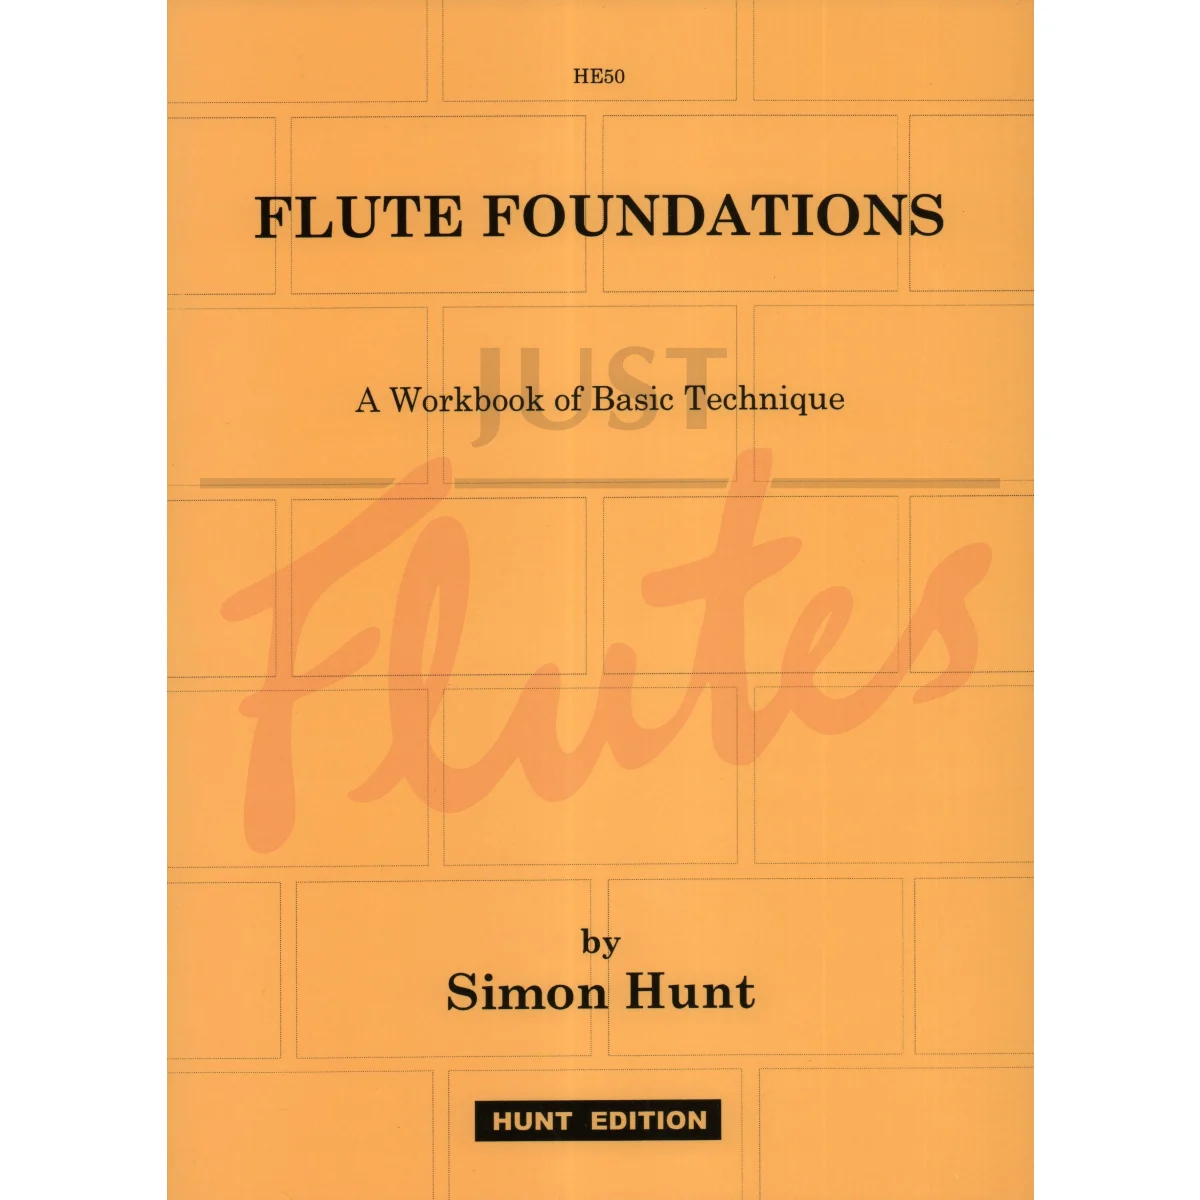 Flute Foundations